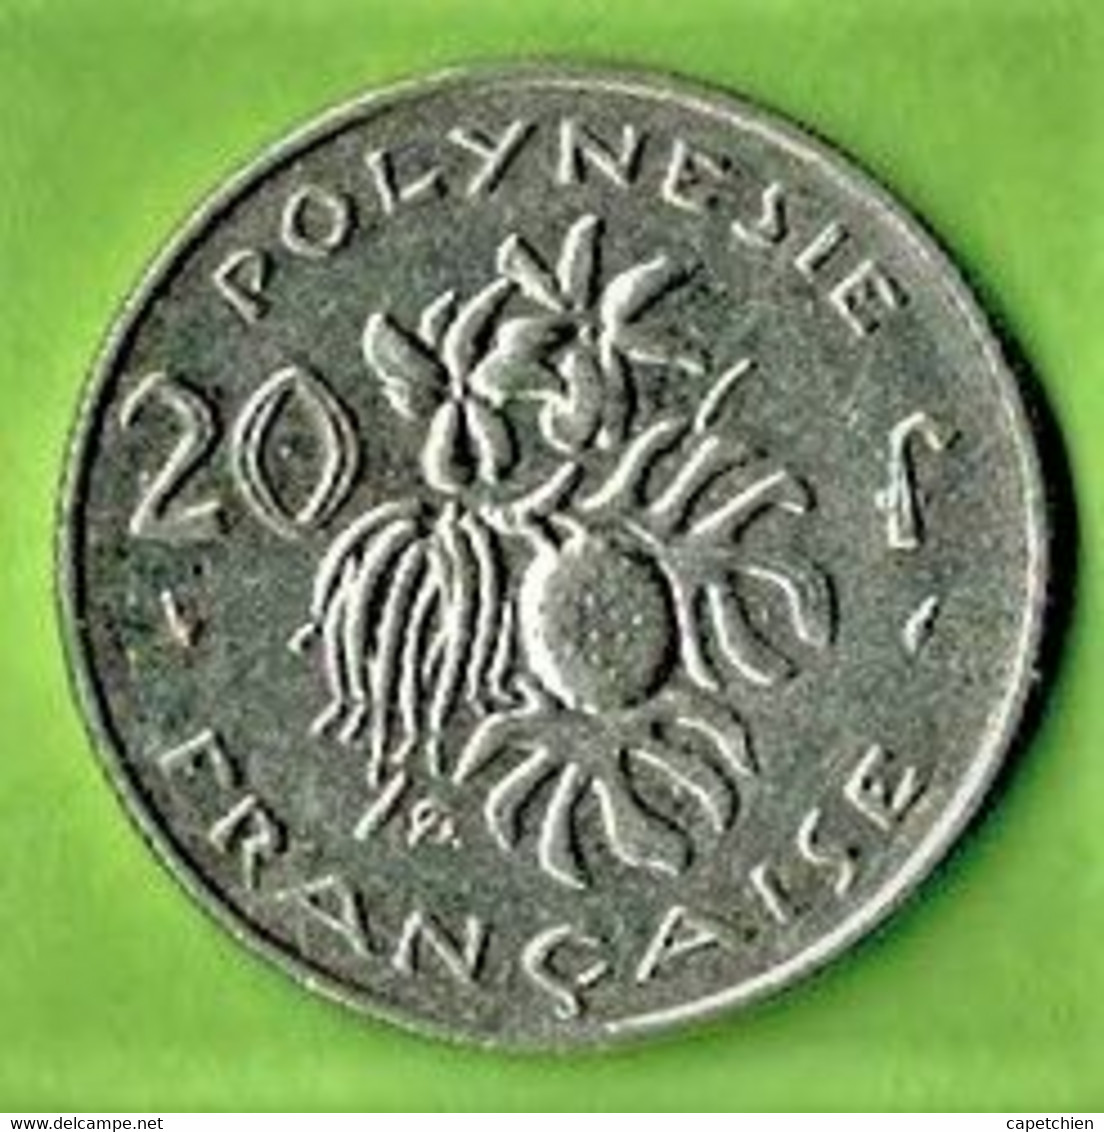 POLYNESIE FRANCAISE / 20 FRANCS / 1983 / - Komoren